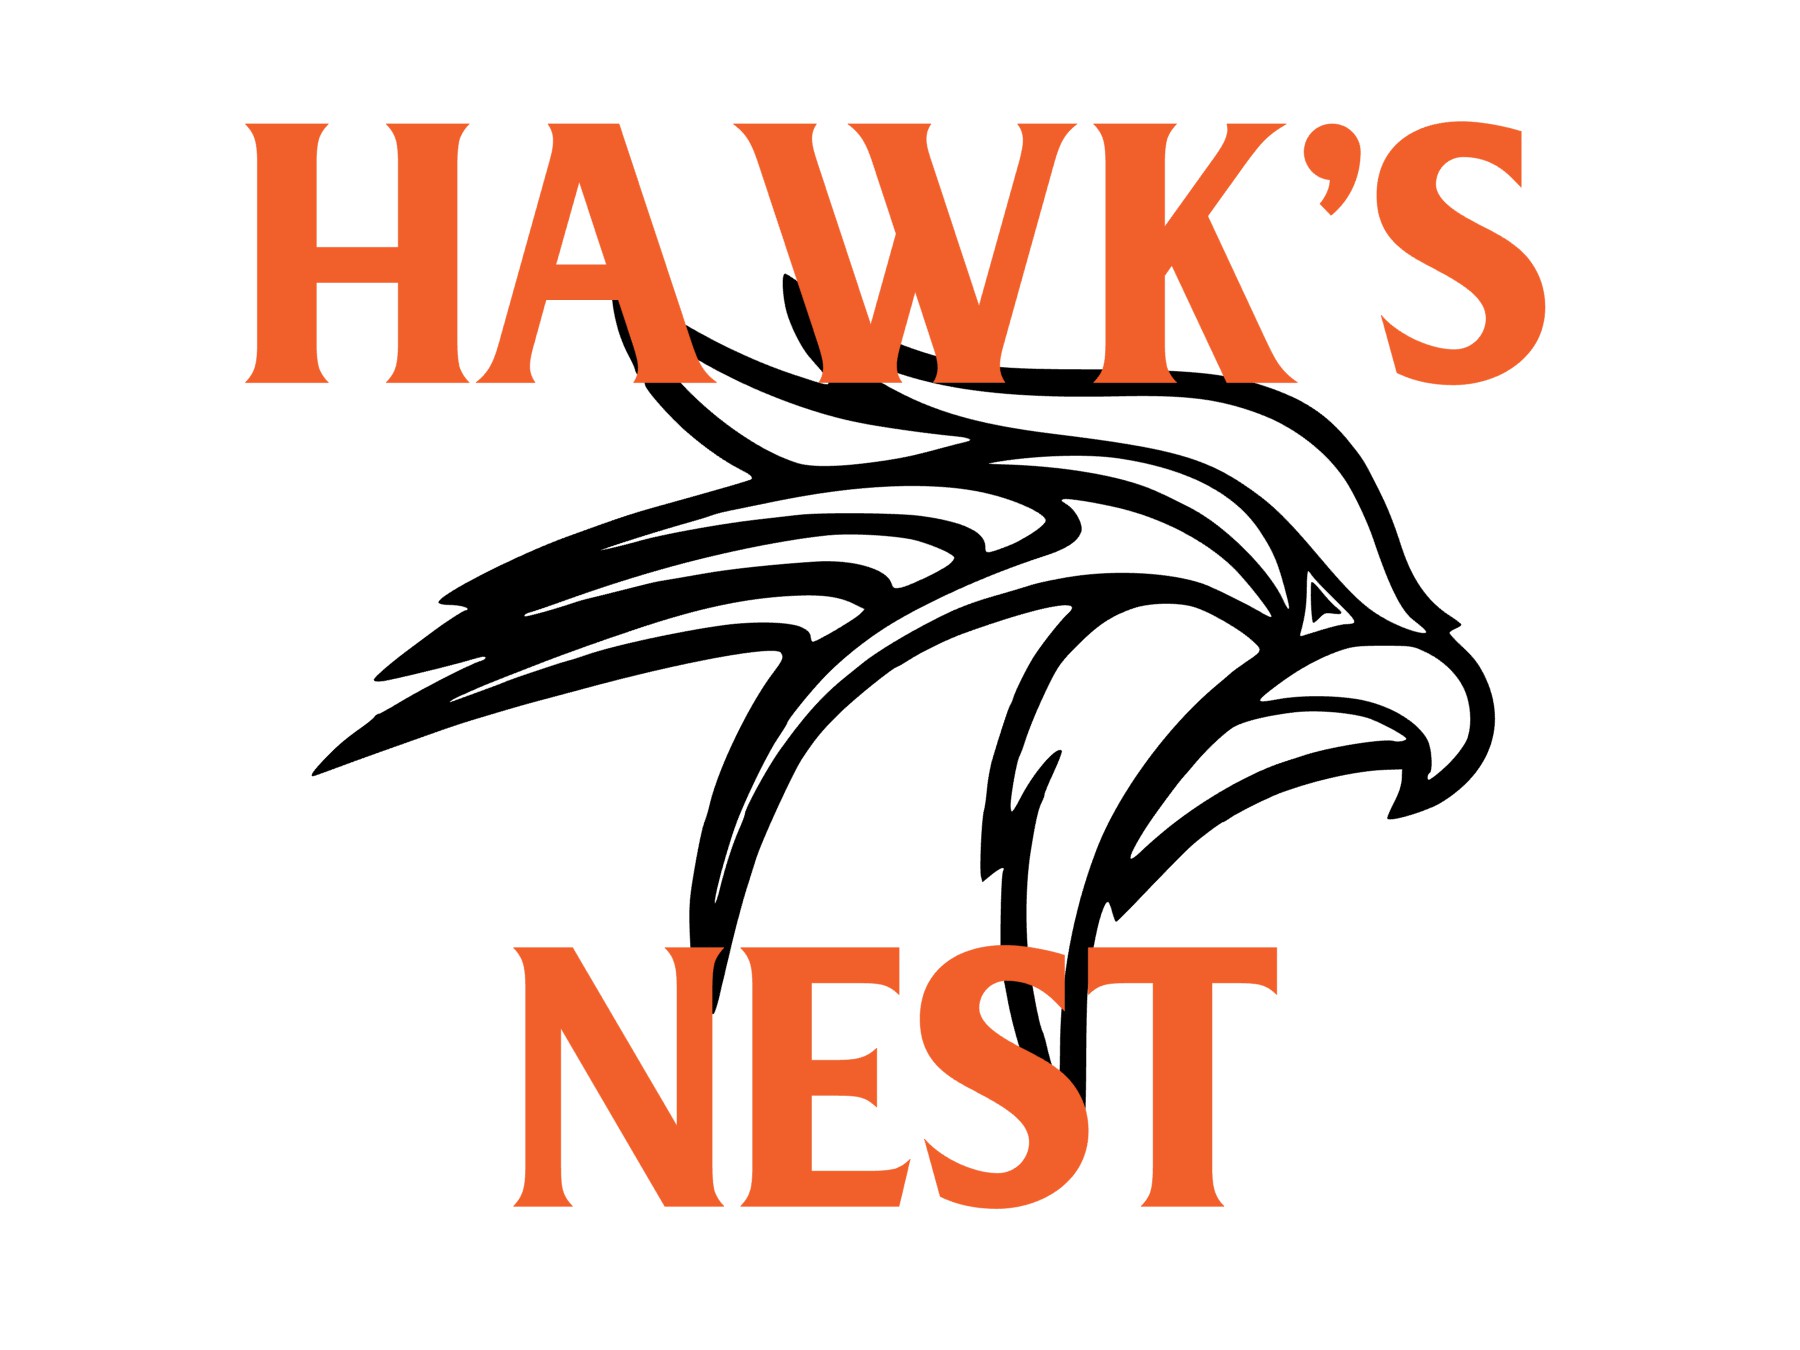 Hawks Nest web